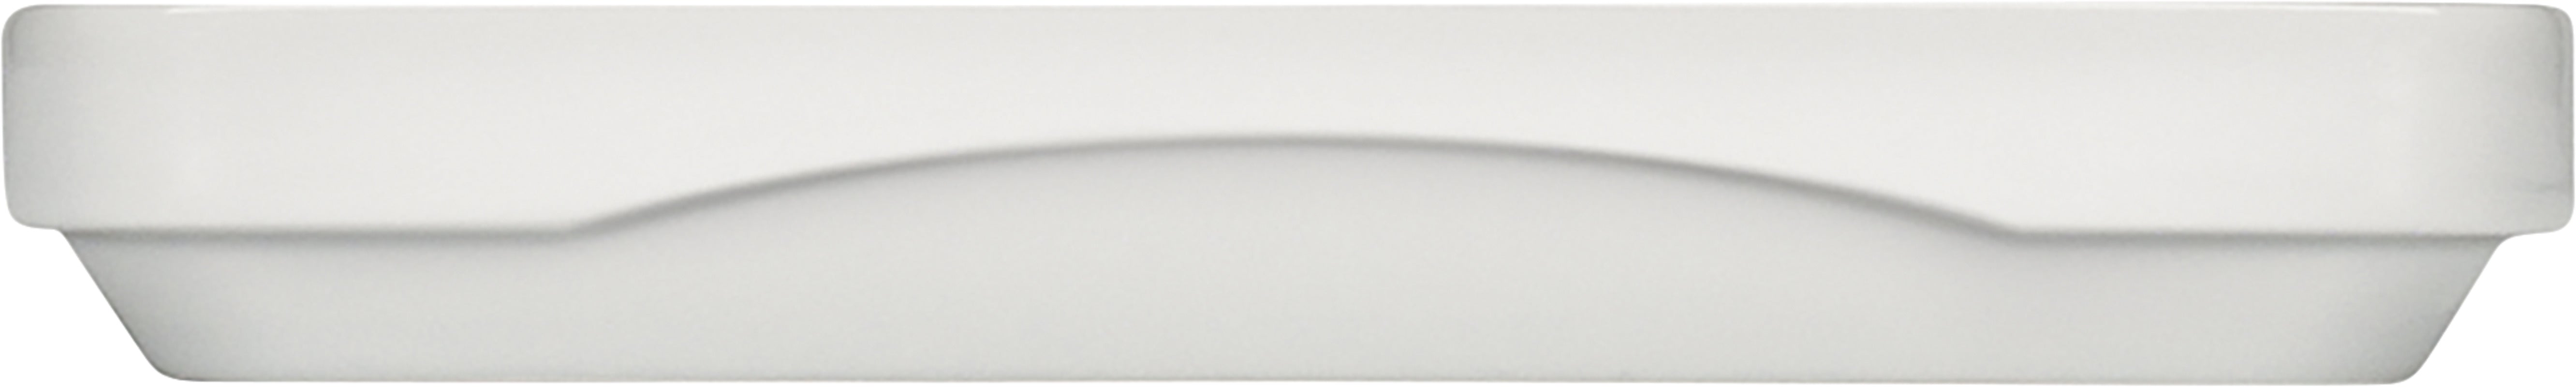 White Airflow & PN Rectangular Platter 6.5